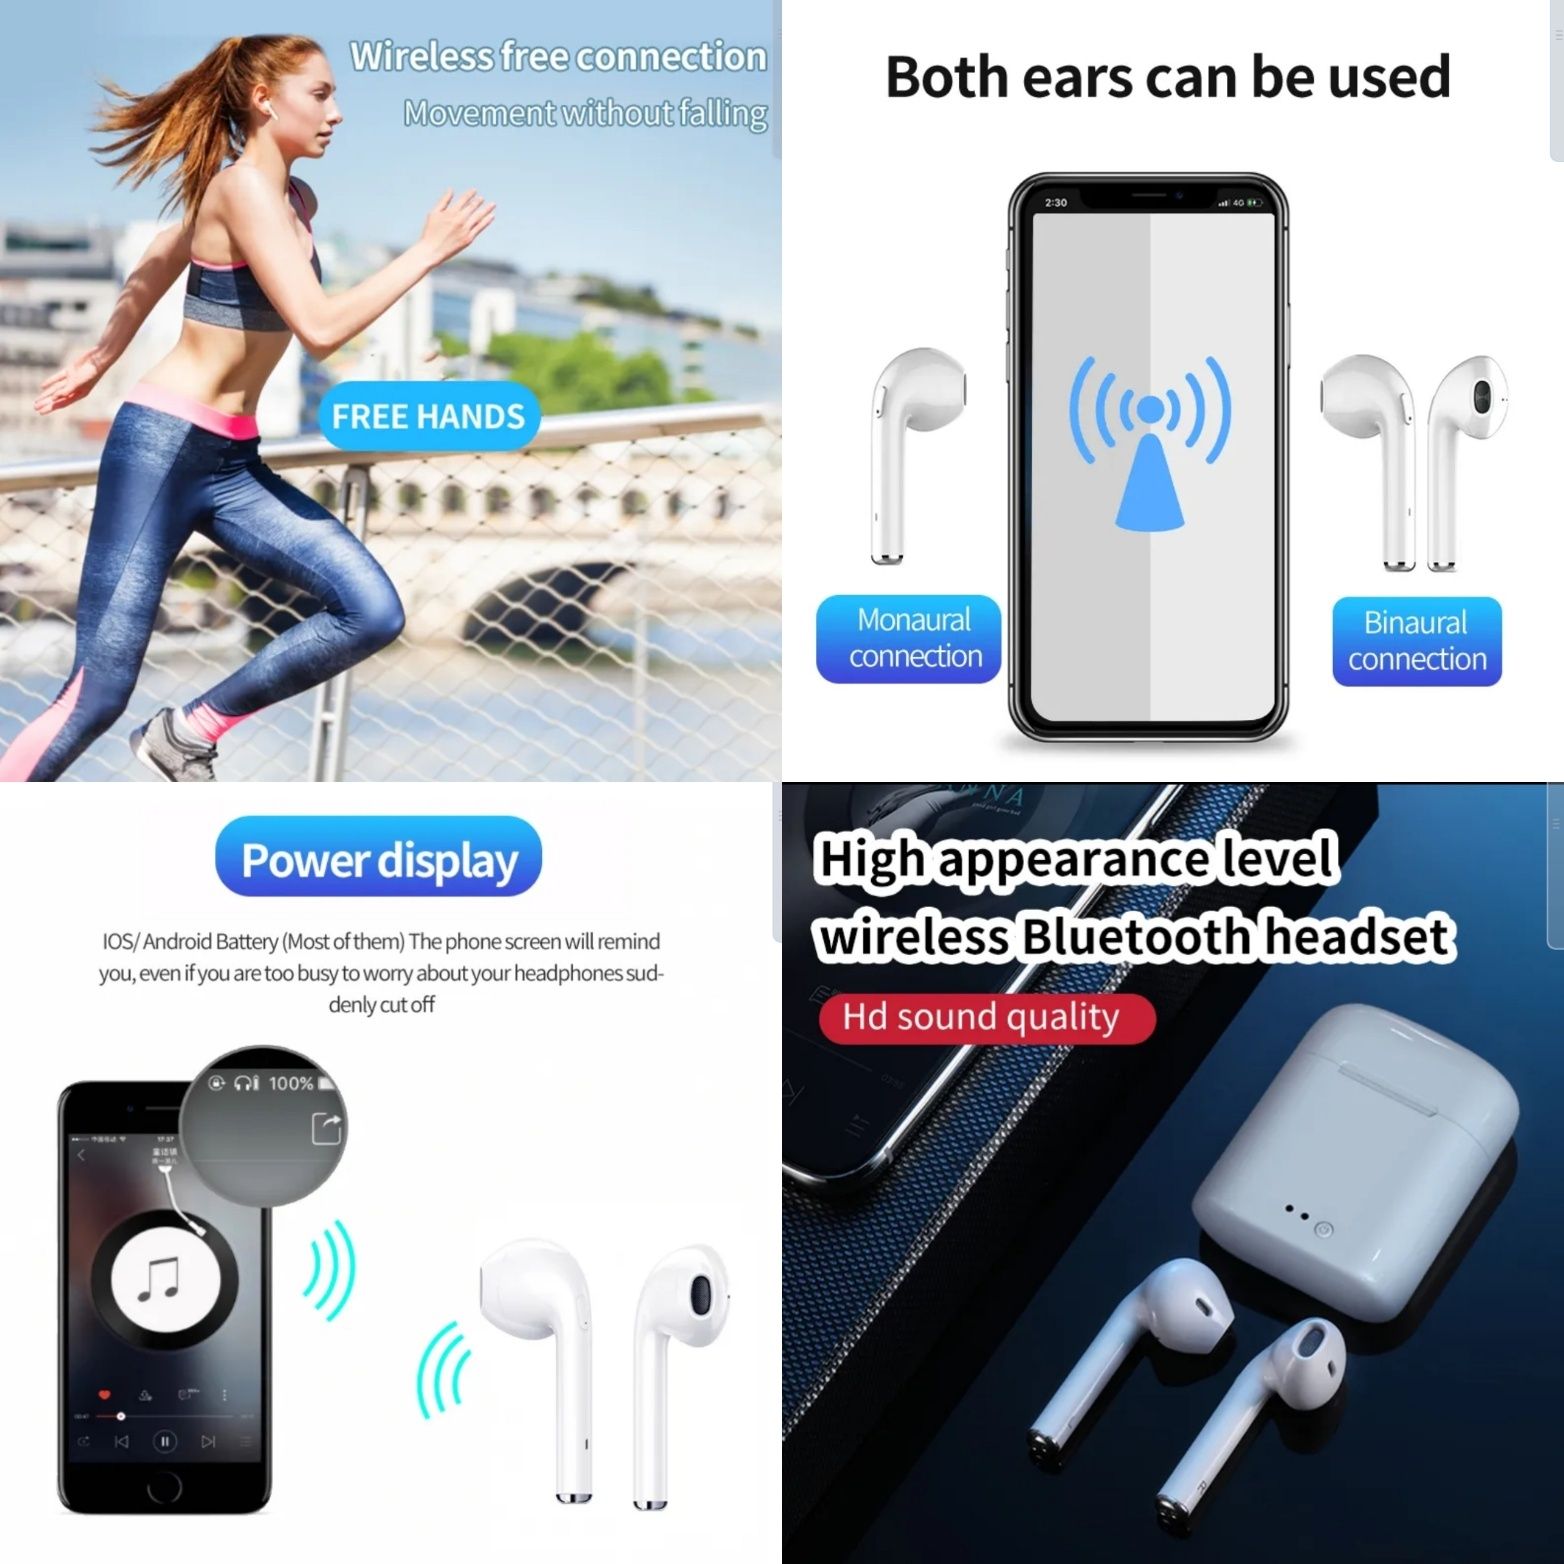 Auscultadores, auriculares, fones de ouvido, bluetooth, smartphone.